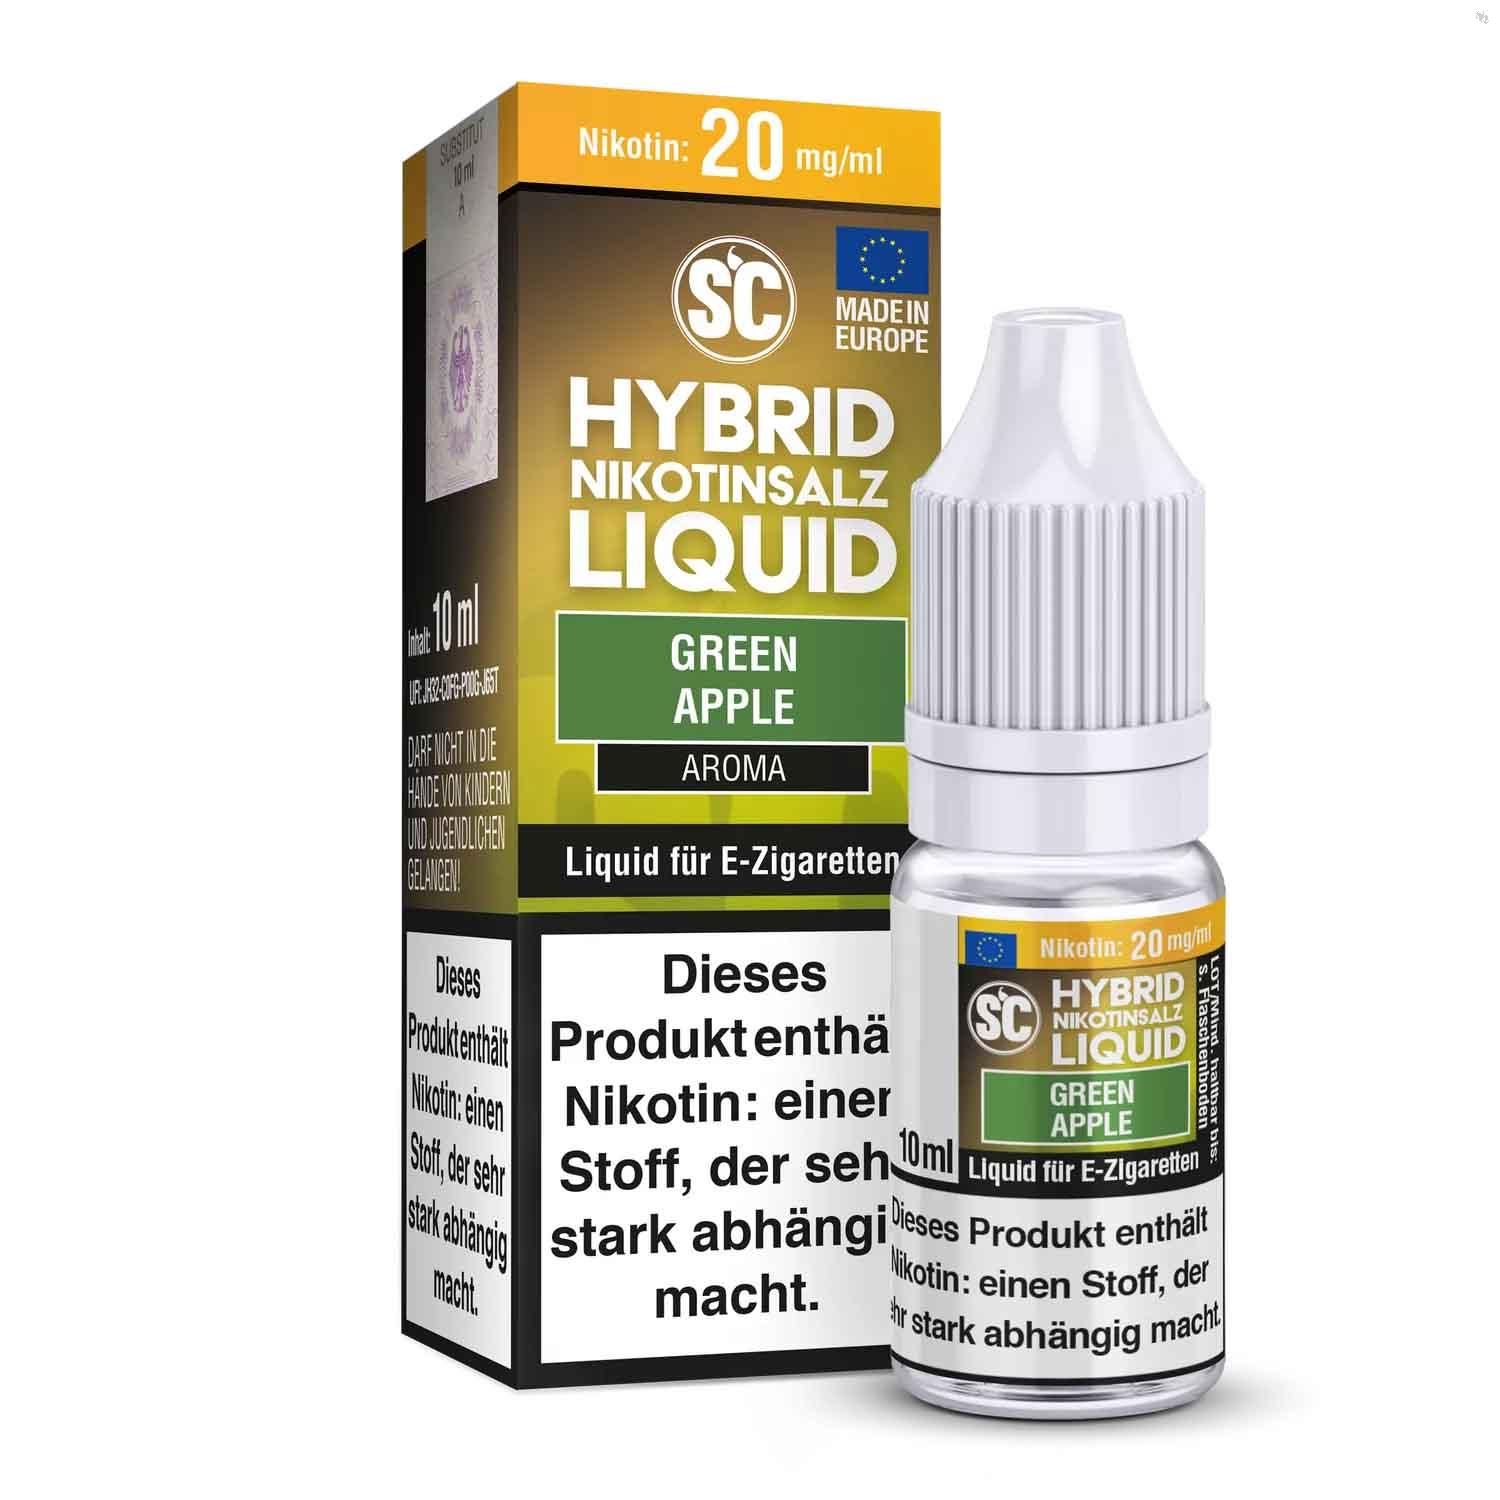 SC - Green Apple Hybrid Nikotinsalz Liquid ✅ Günstig kaufen! 